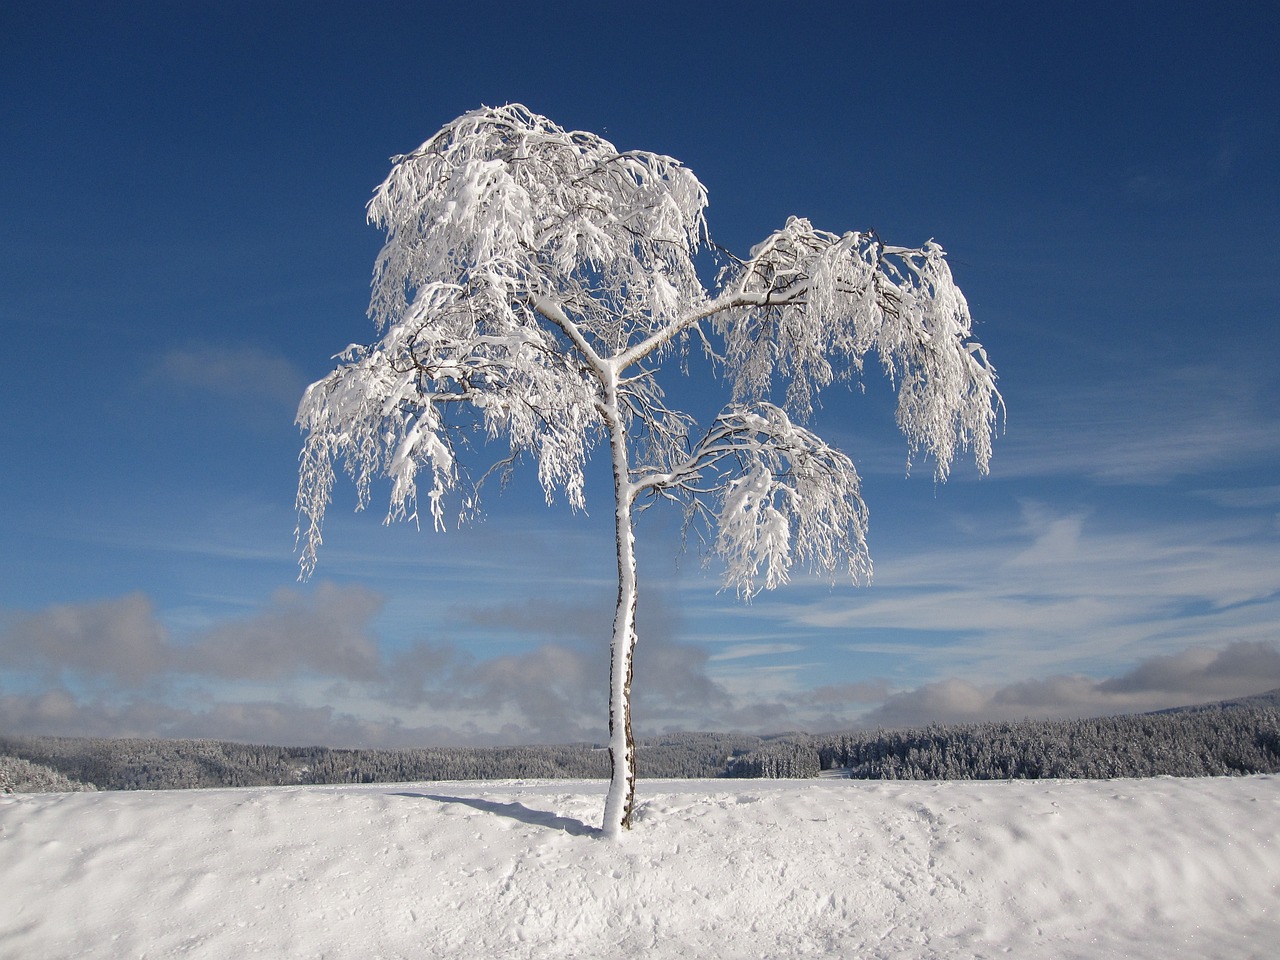 Bild: winter-1675197_1280-1 (Quelle: pixabay.com)